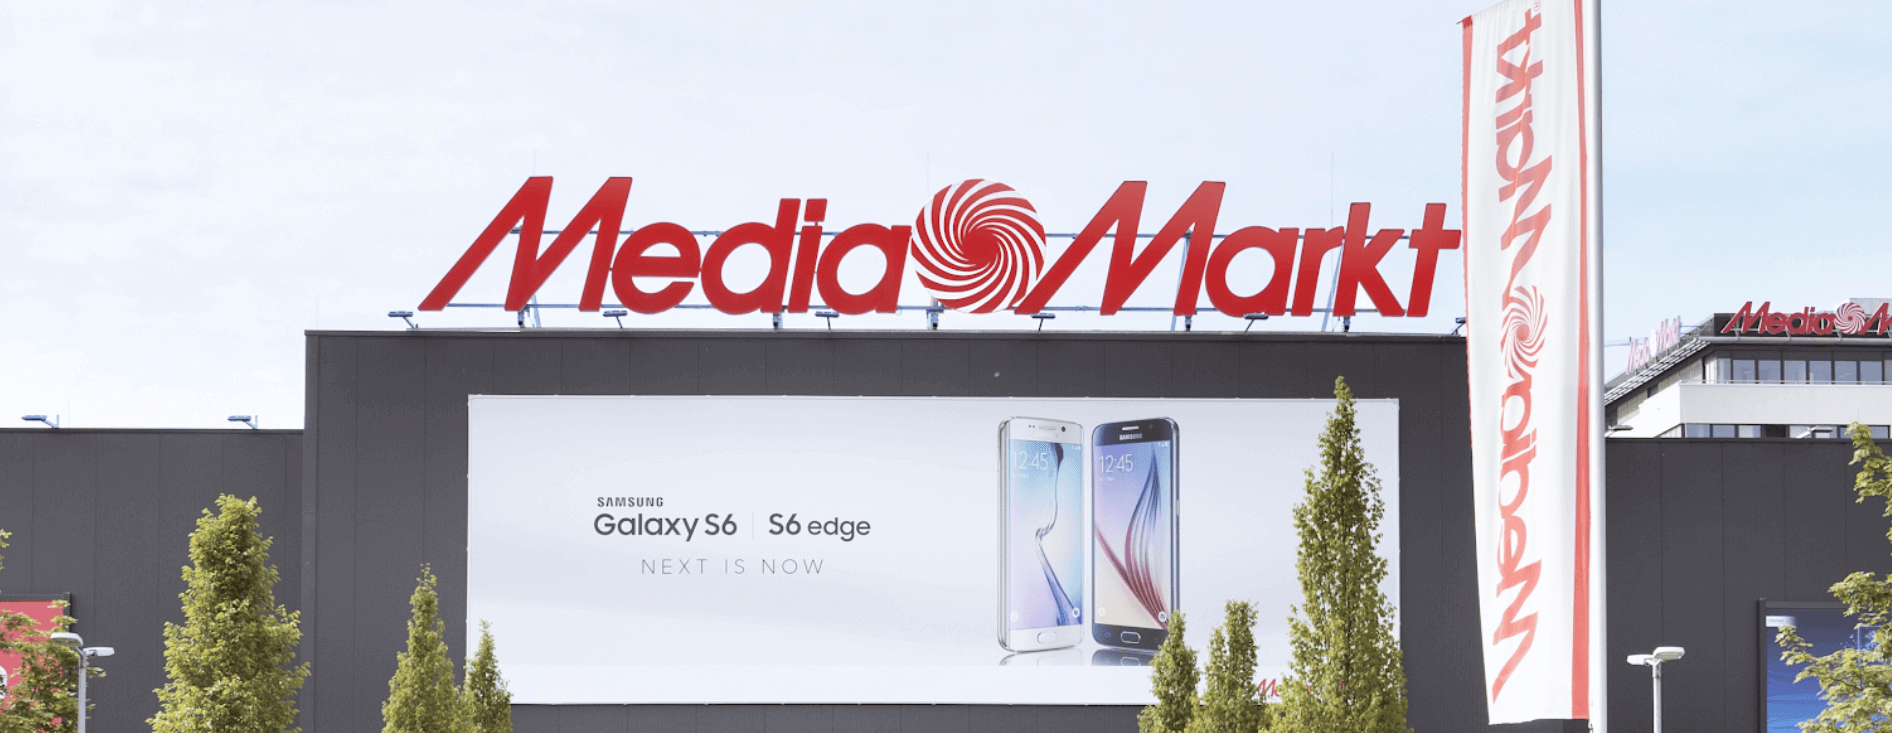 Tienda MediaMarkt en Portugal